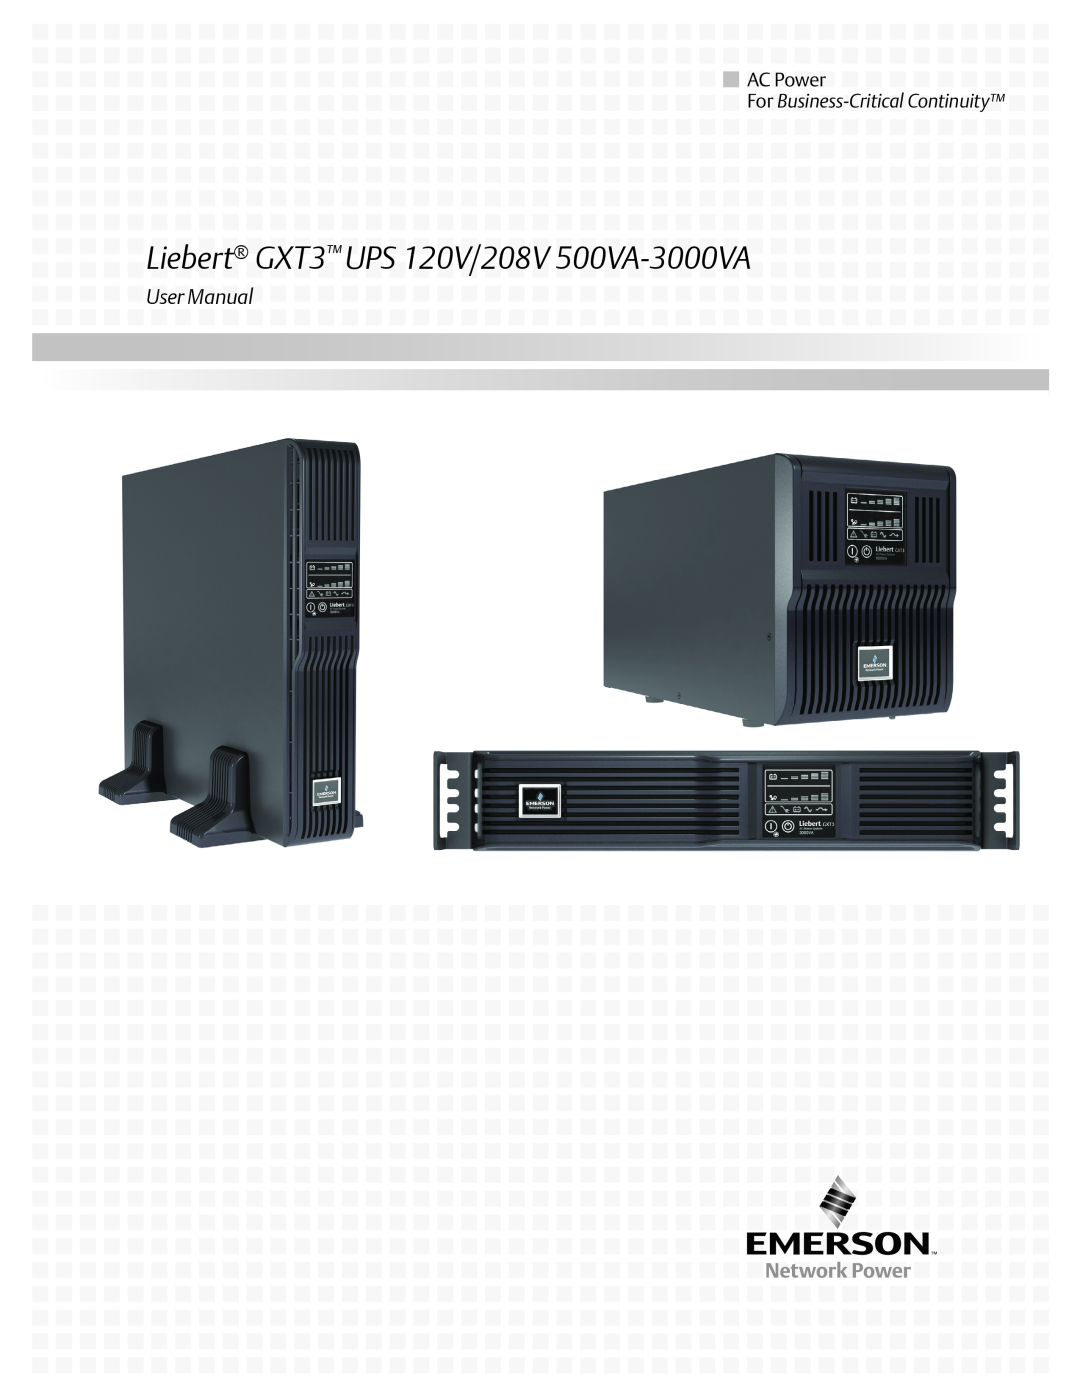 Emerson user manual Liebert GXT3 UPS 120V/208V 500VA-3000VA, AC Power, User Manual, For Business-Critical Continuity 